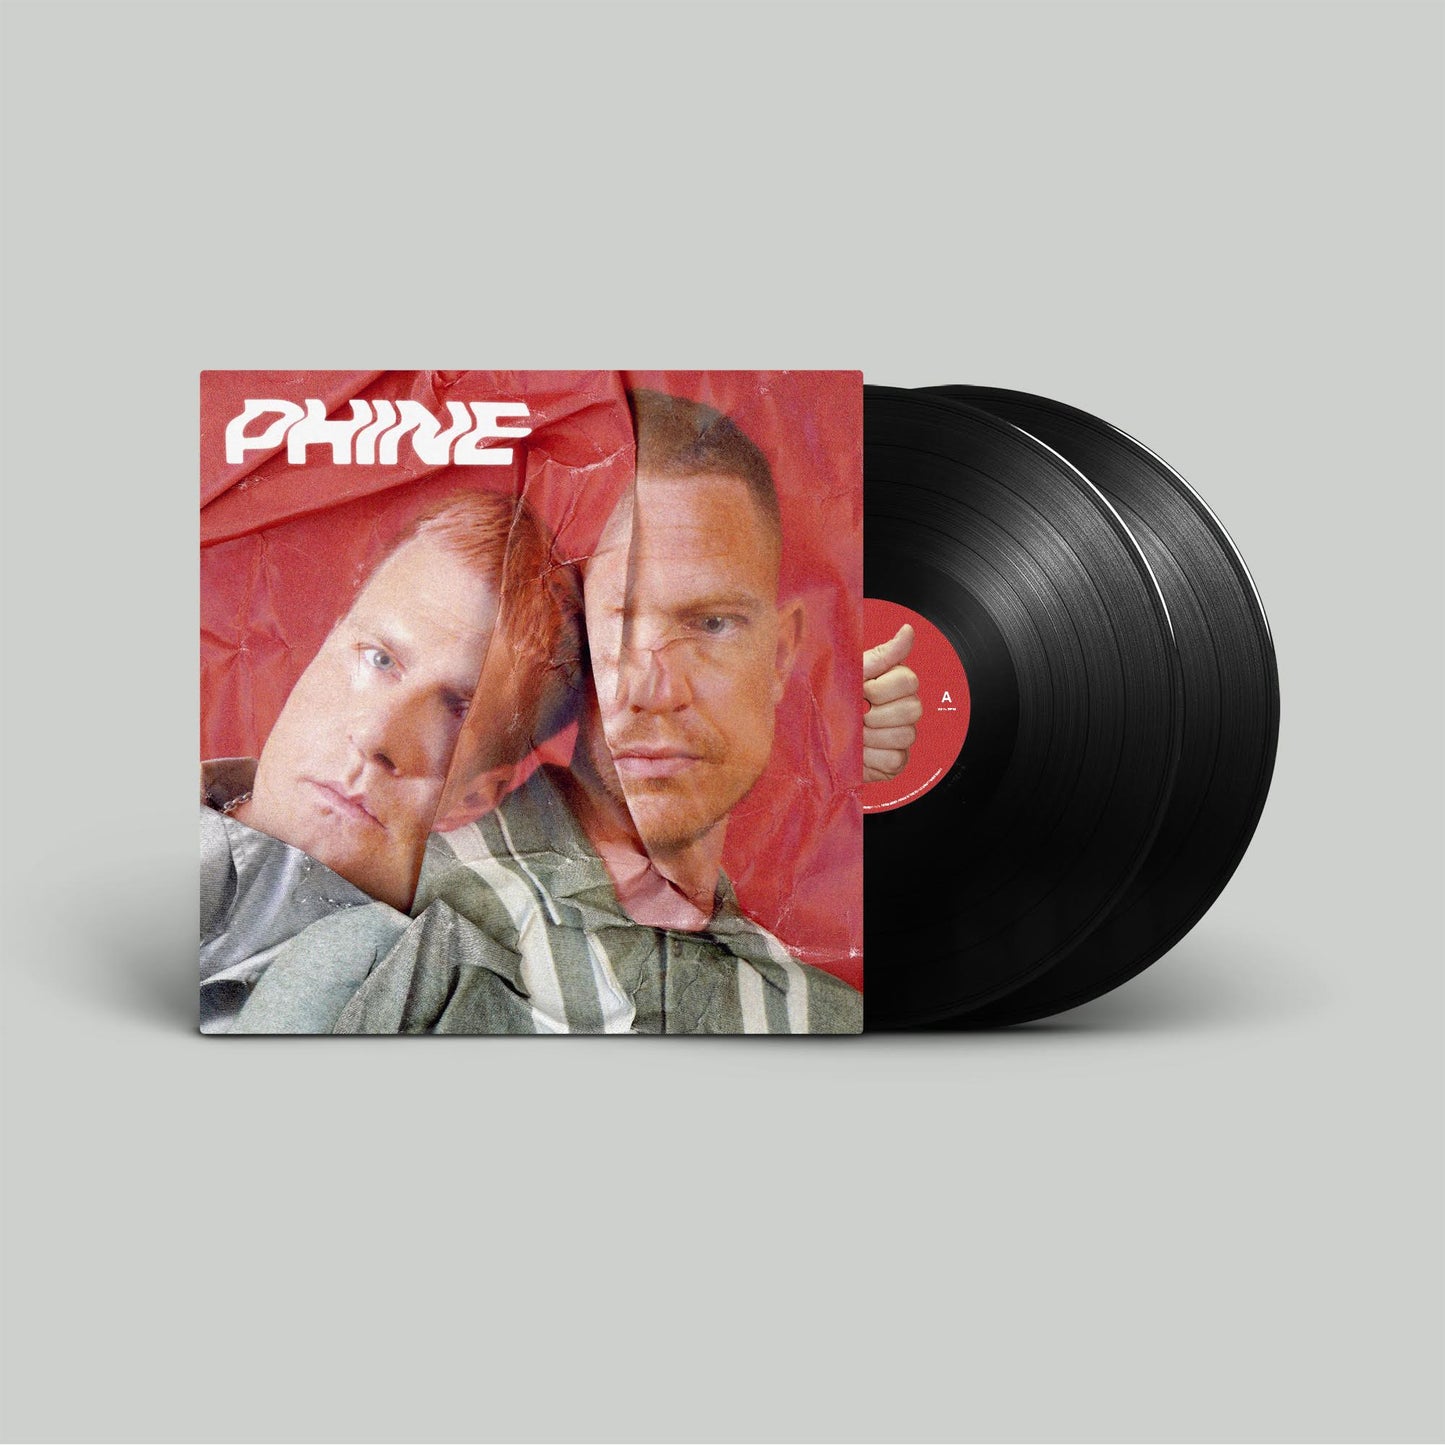 Phlake – Phine